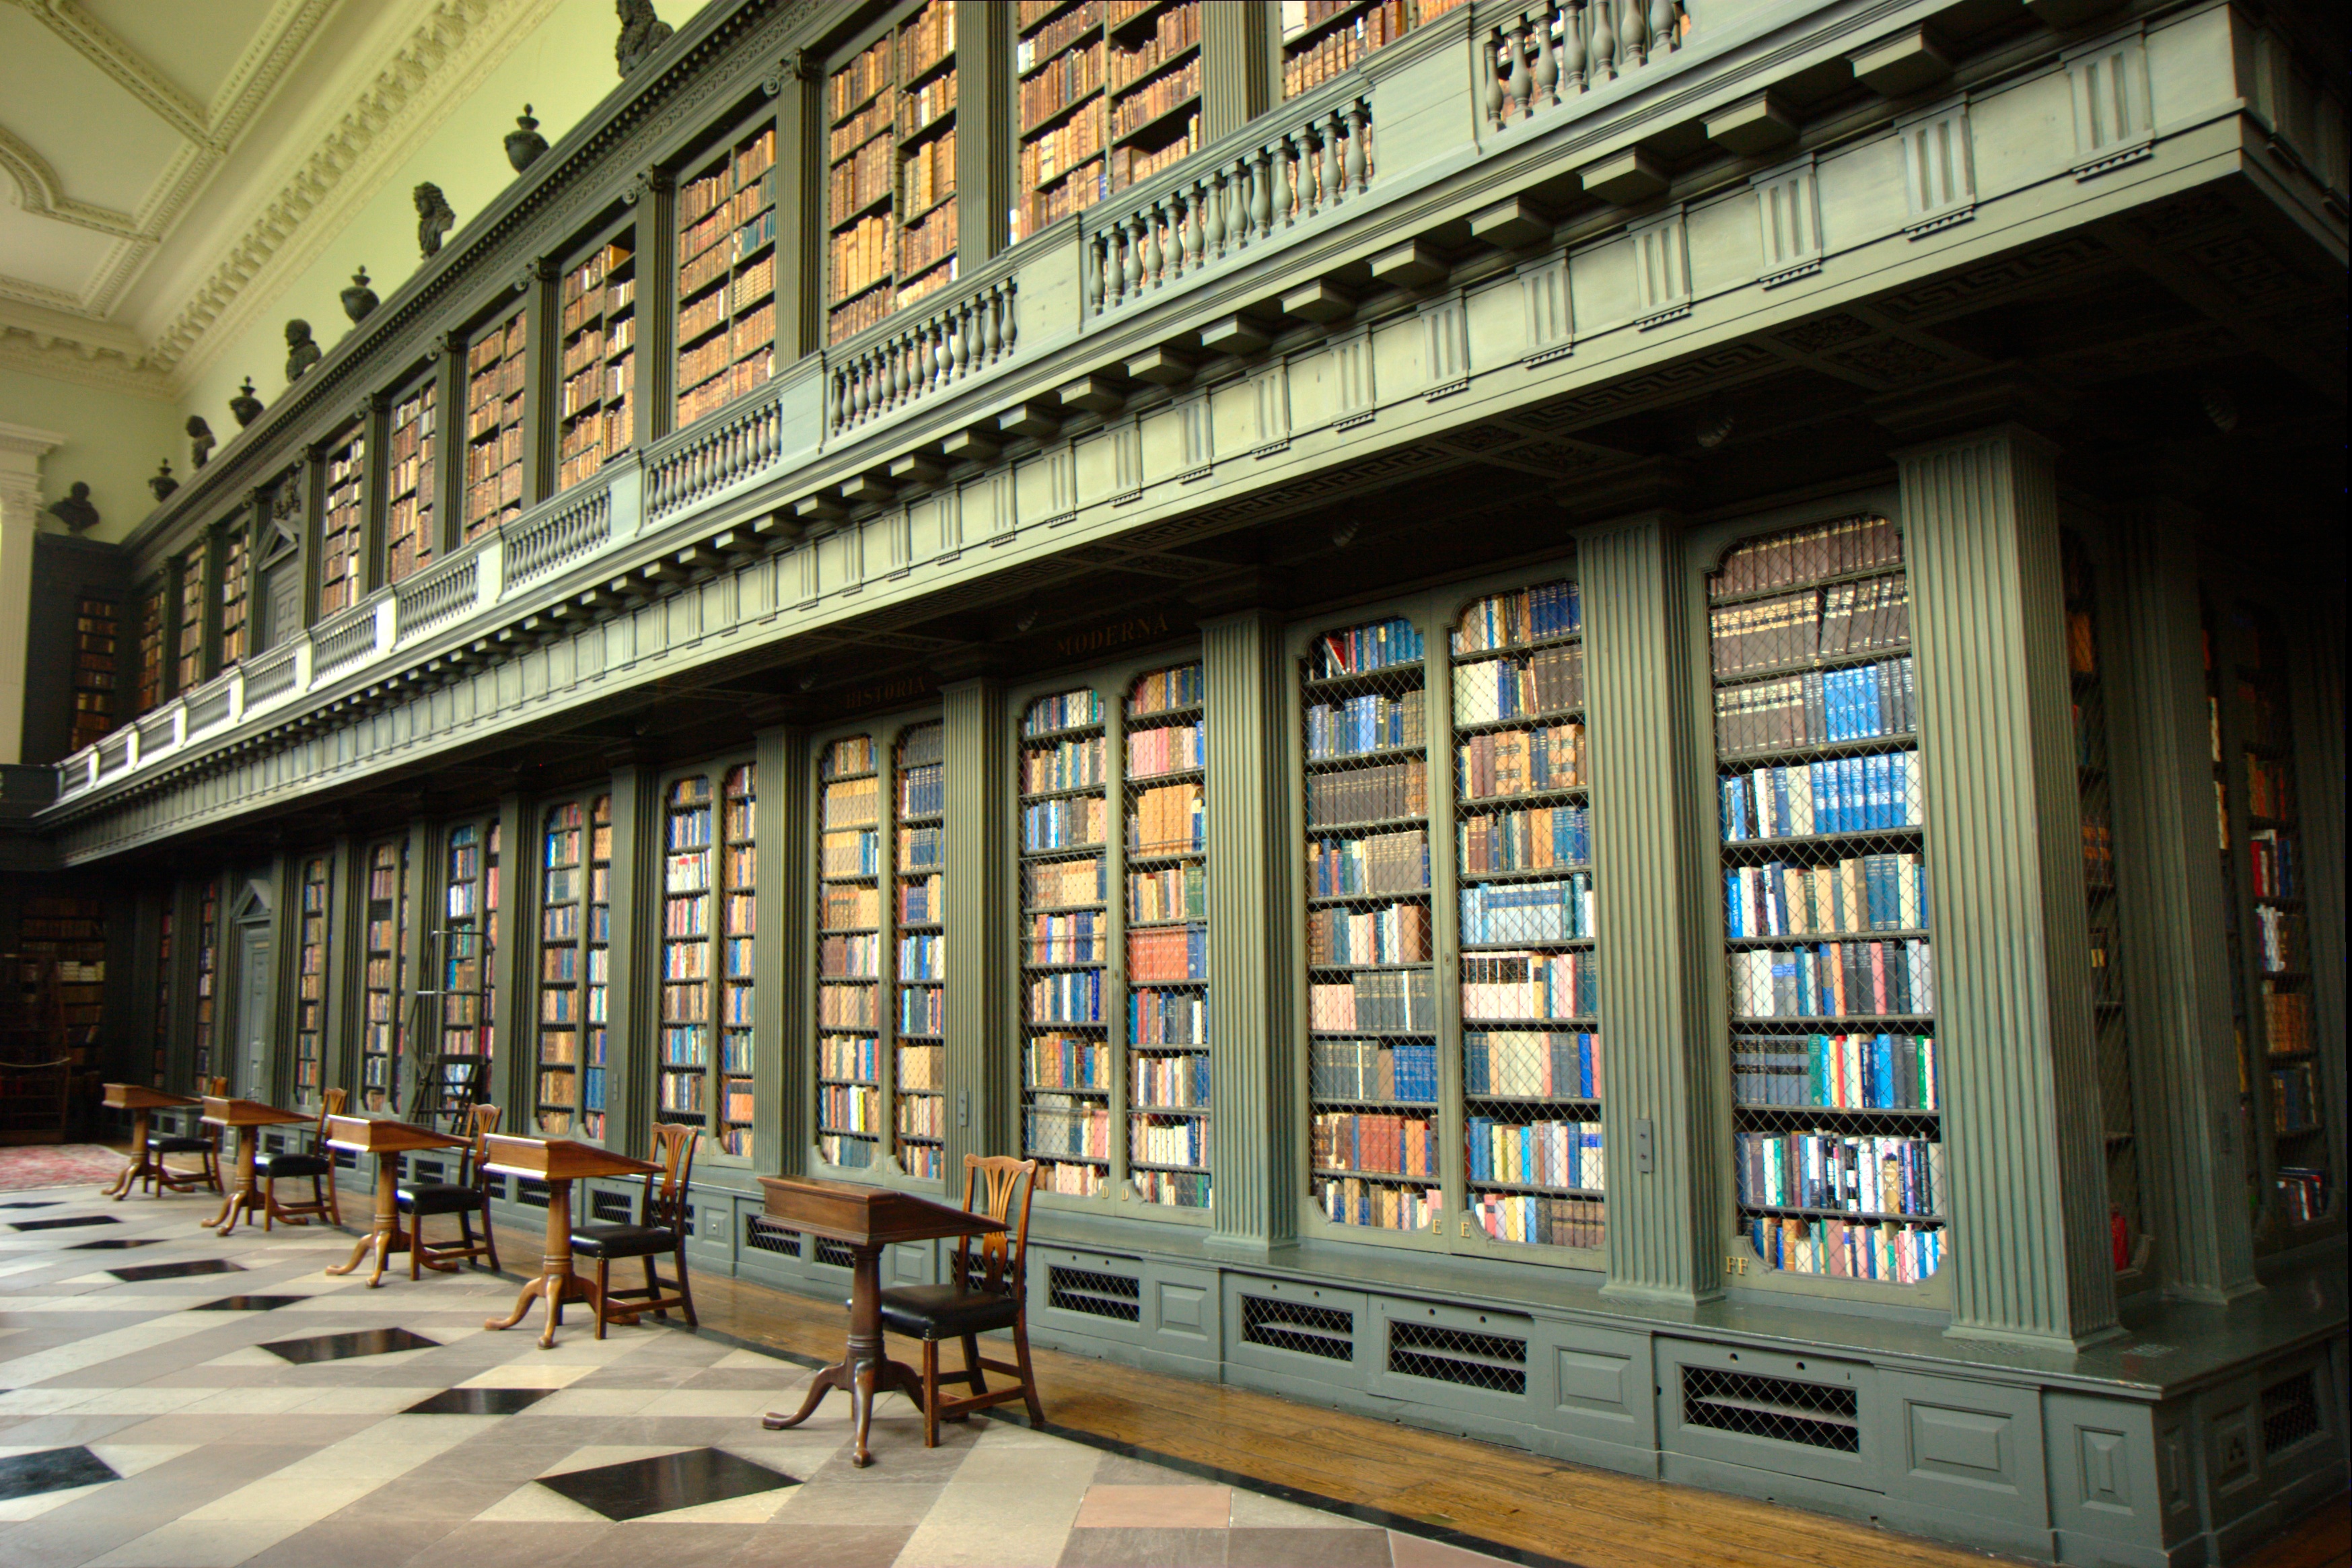 Compiled library. Библиотека Кодрингтон Великобритания. Библиотека Кодрингтон (Оксфорд, Великобритания. Оксфорд университет библиотека. Библиотека «University Club Library», Нью- Йорк, США. (Peter Bond).